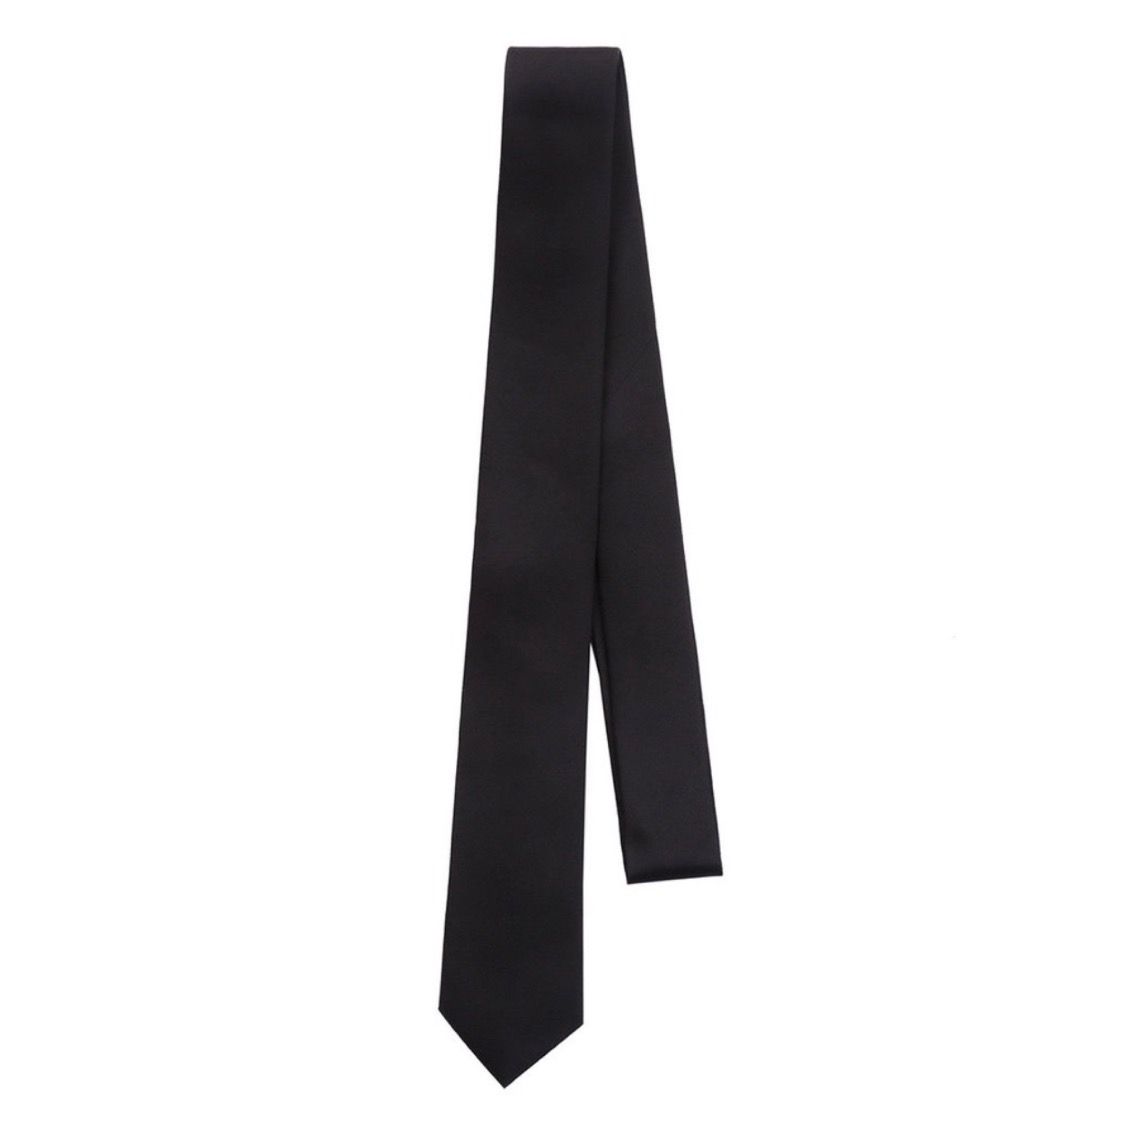 JOHNLAWRENCESULLIVAN - 【再販売通知受付可能】Silk Neck Tie(BLACK 